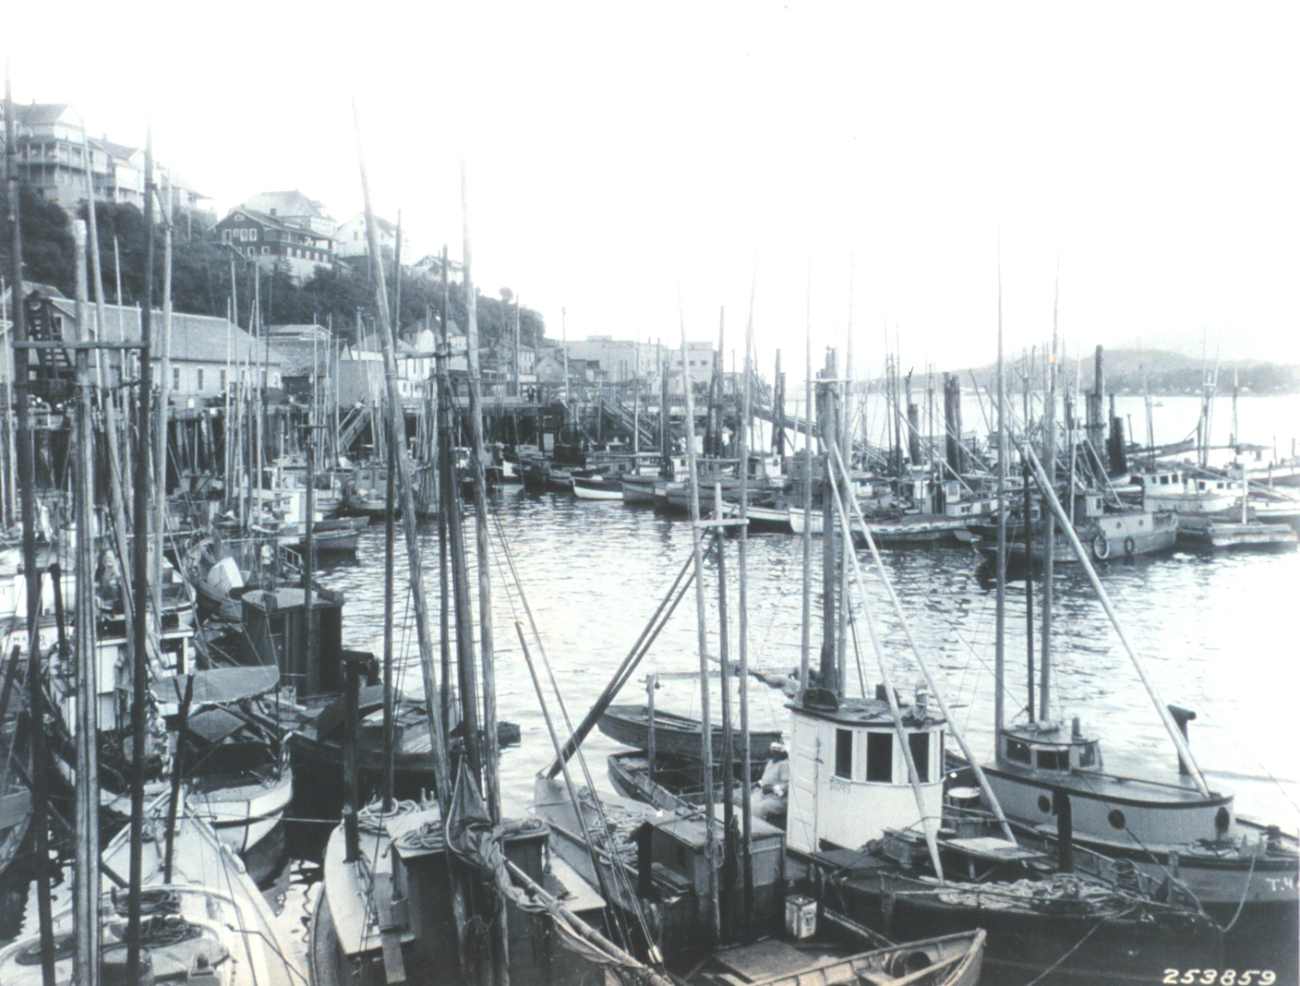 The fishing fleet at Ketchikan